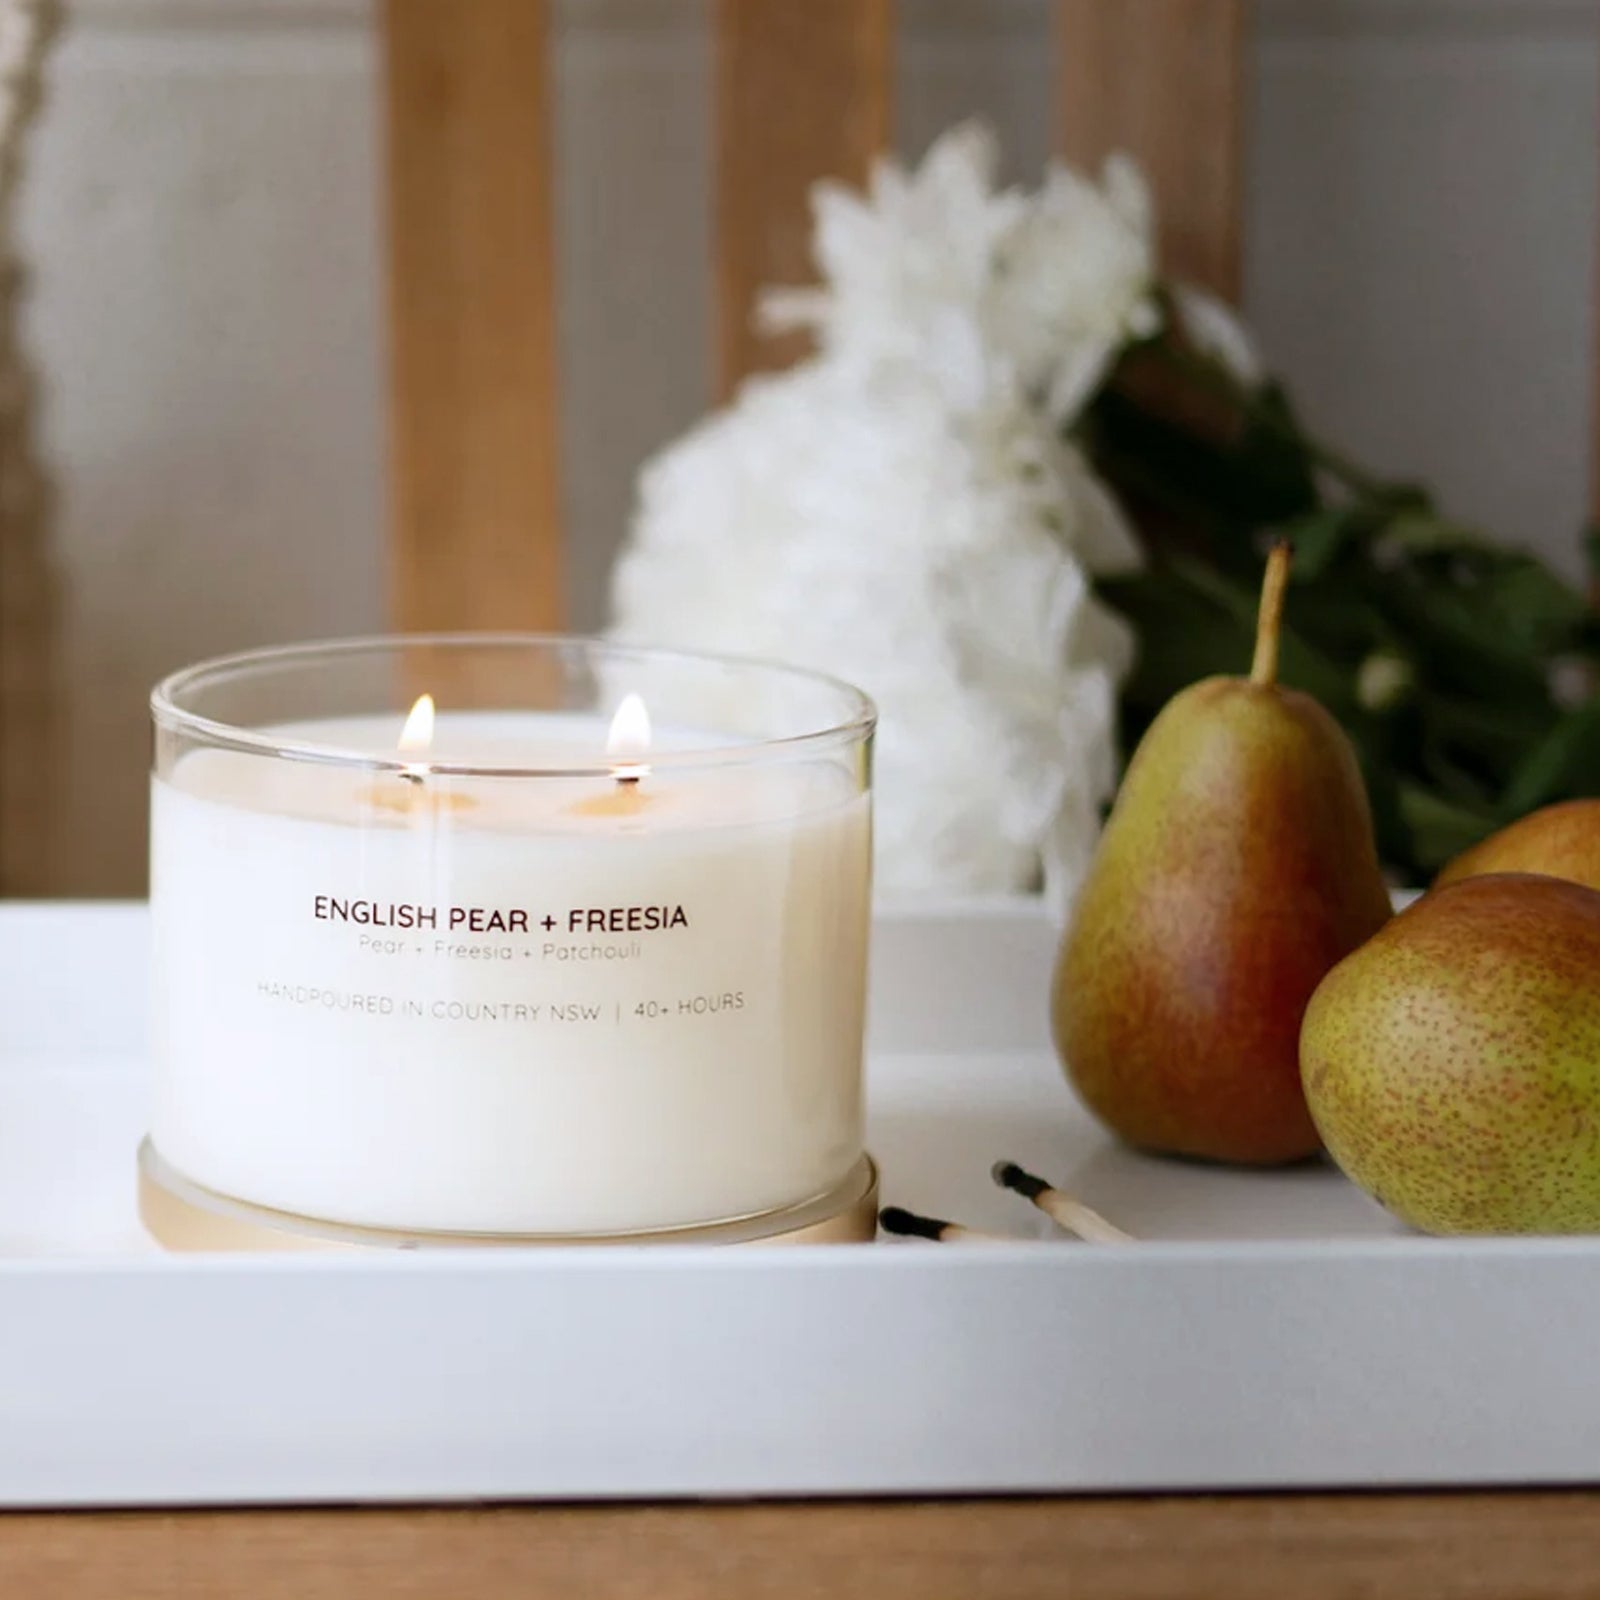 100% Natural Soy Wax "English Pear & Freesia" Candle from Australia (330g) - Horizon Farms